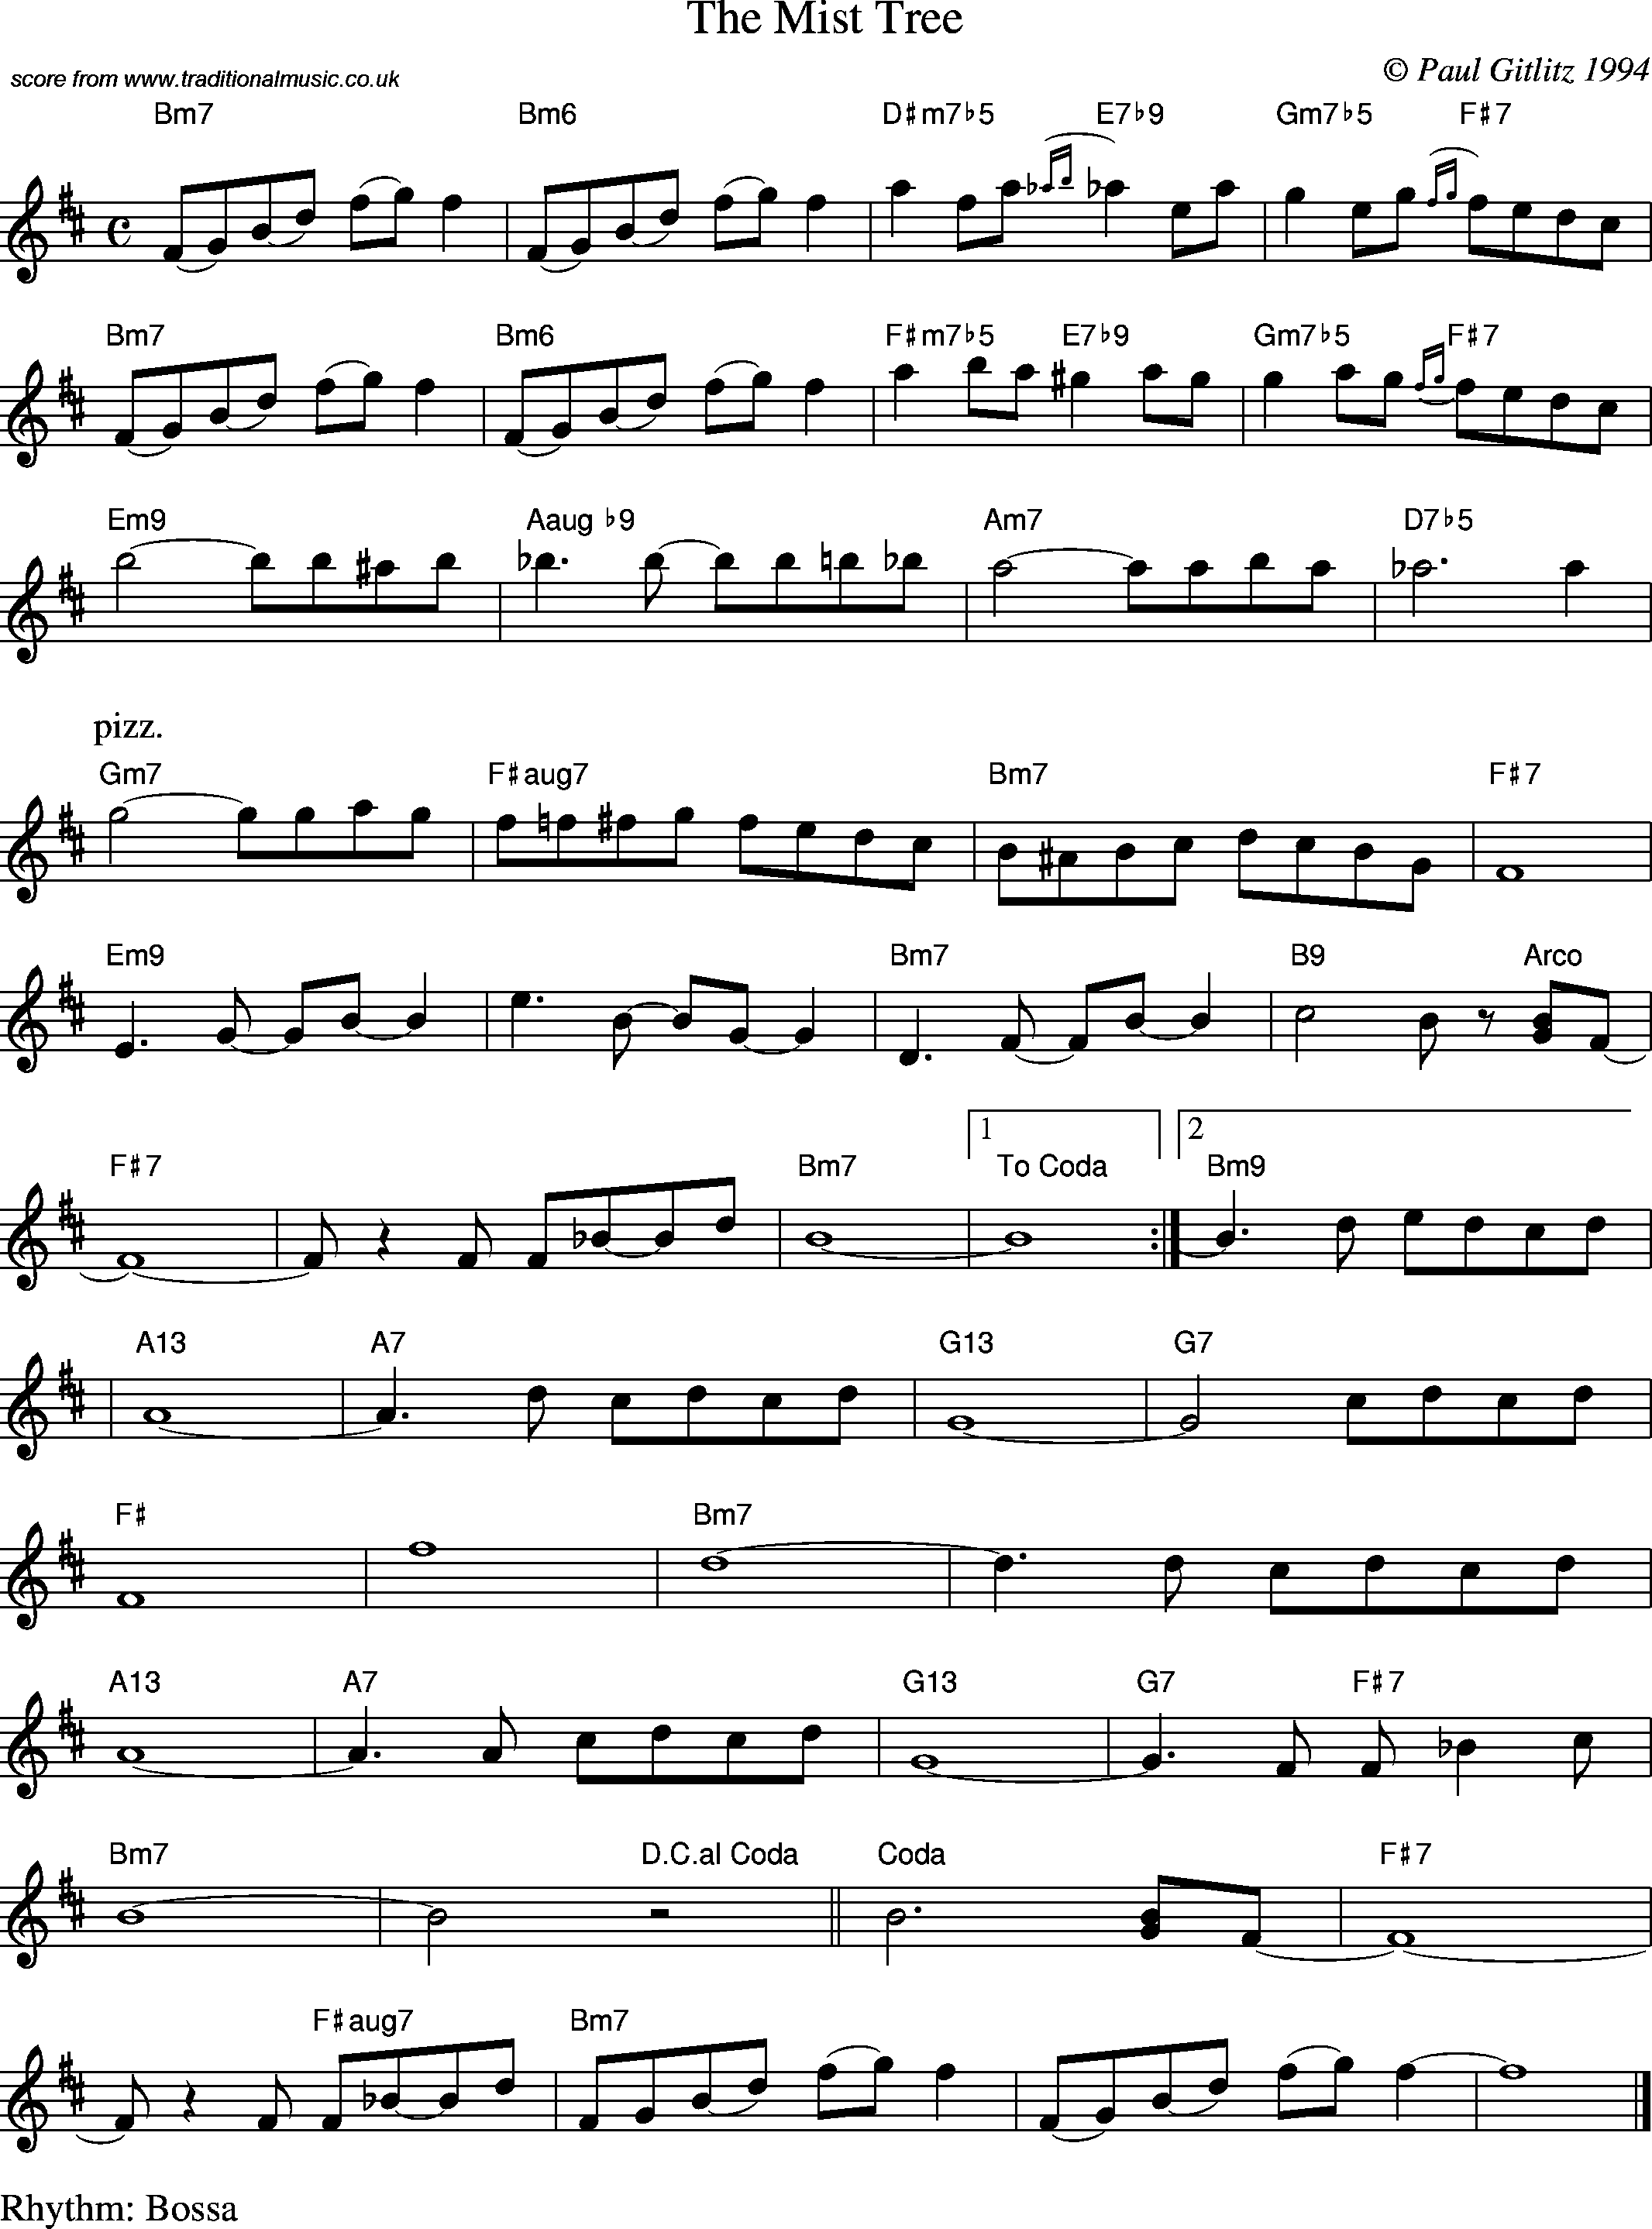 Sheet Music Score for Swing - The Mist Tree